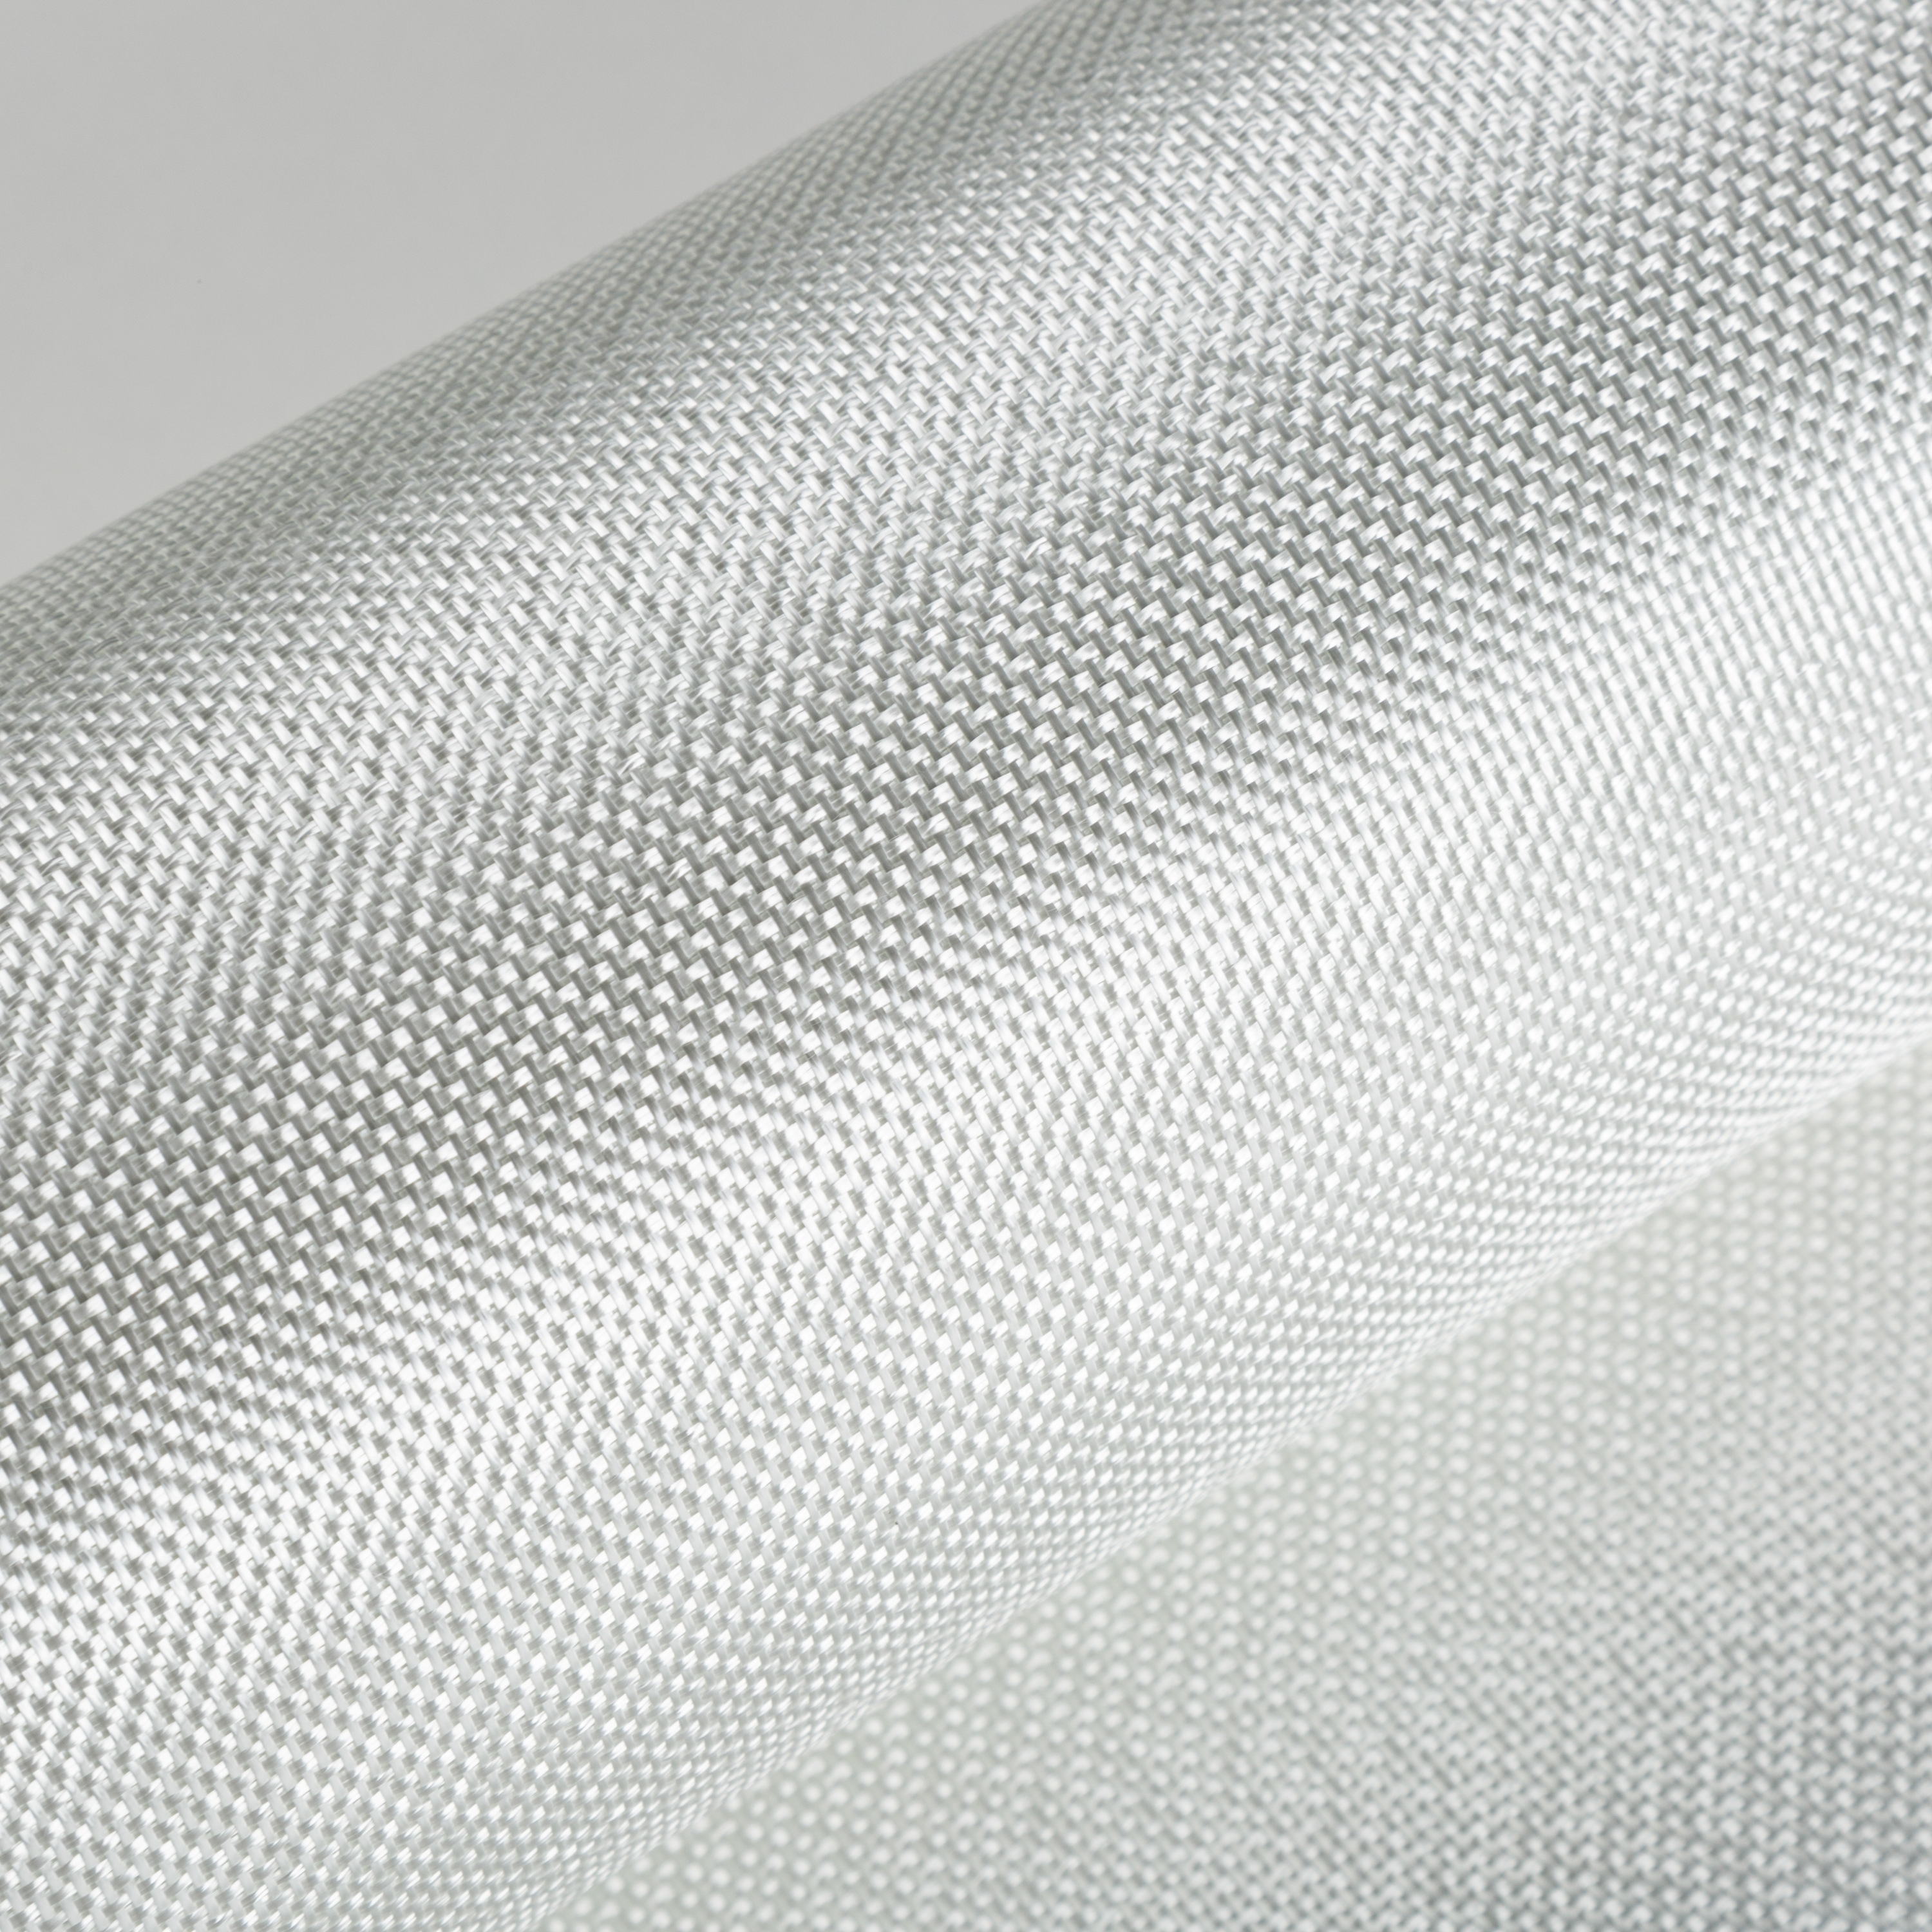 E-class 135gsm Glass fiber Tear Resistant Woven Fiberglass Fabric Cut-resistant Reinforce Cloth 1m*1m